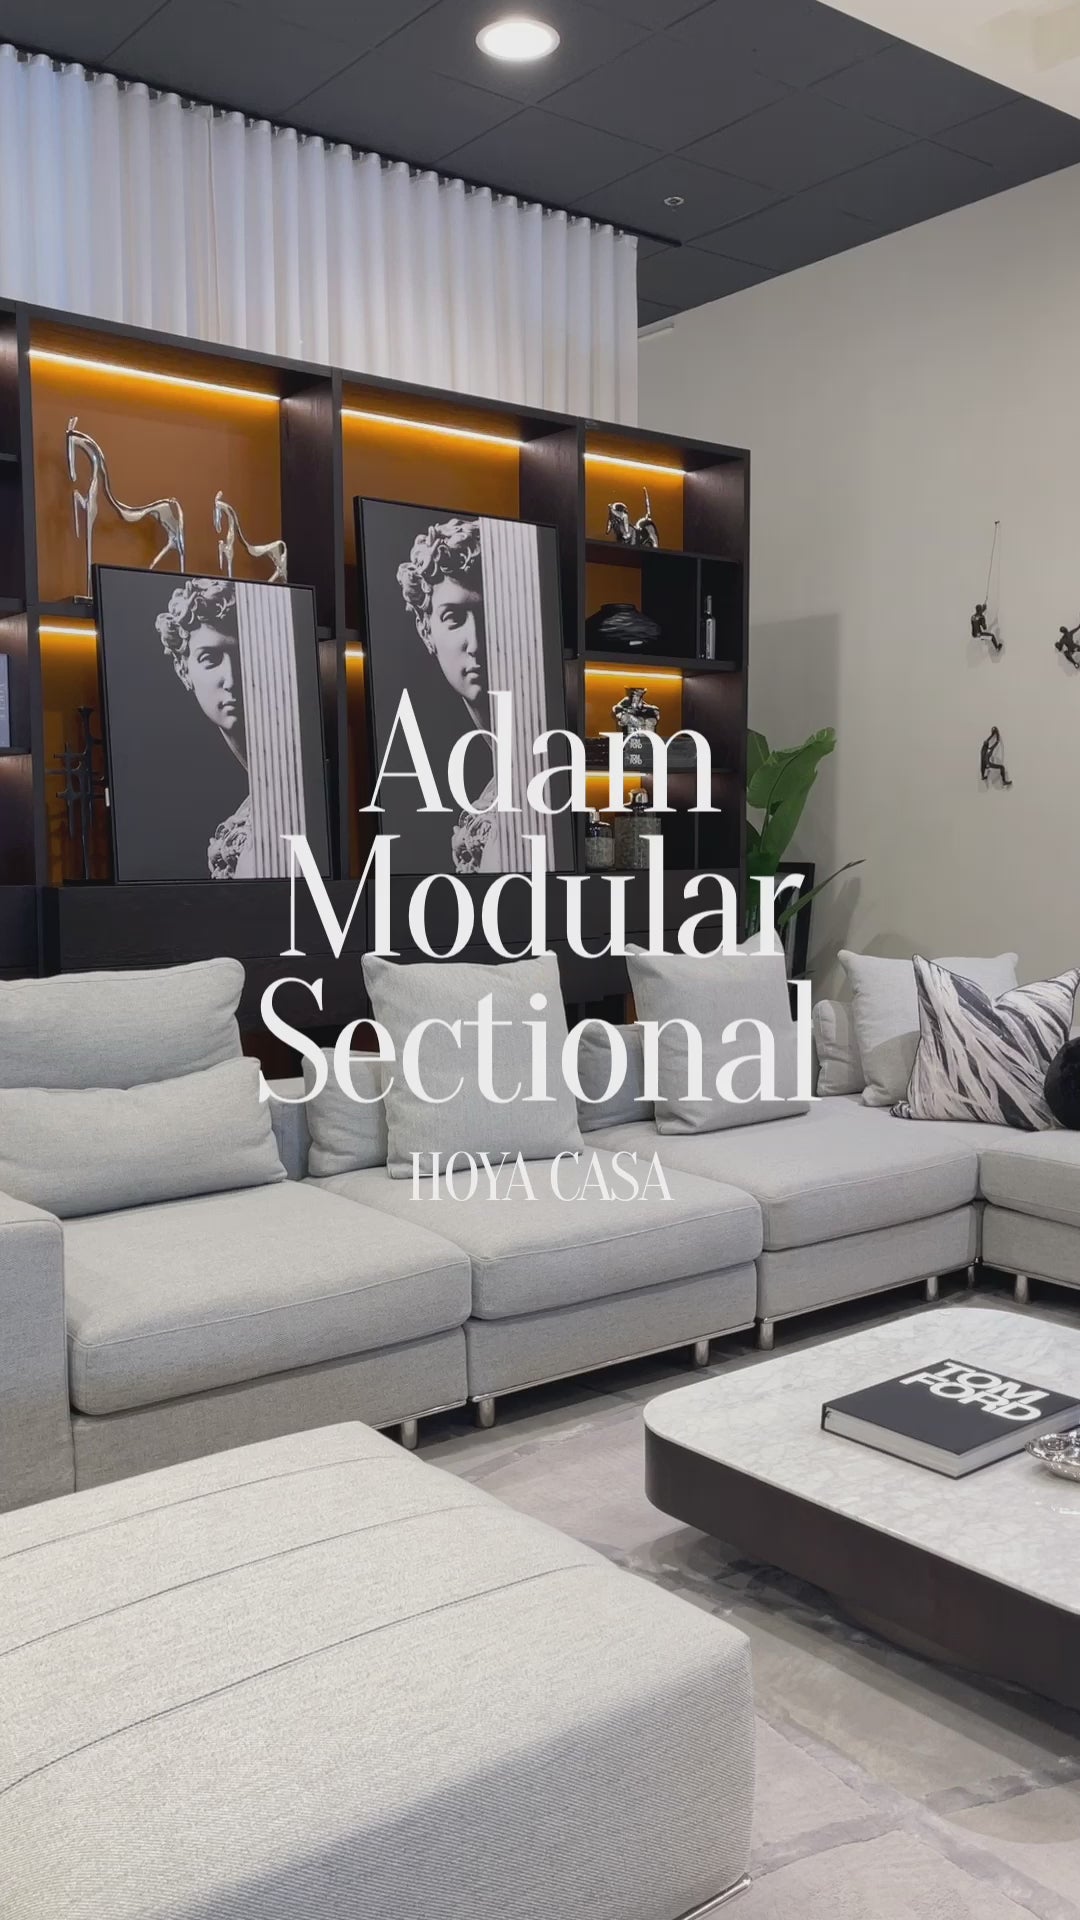 Adam Modular Sectional